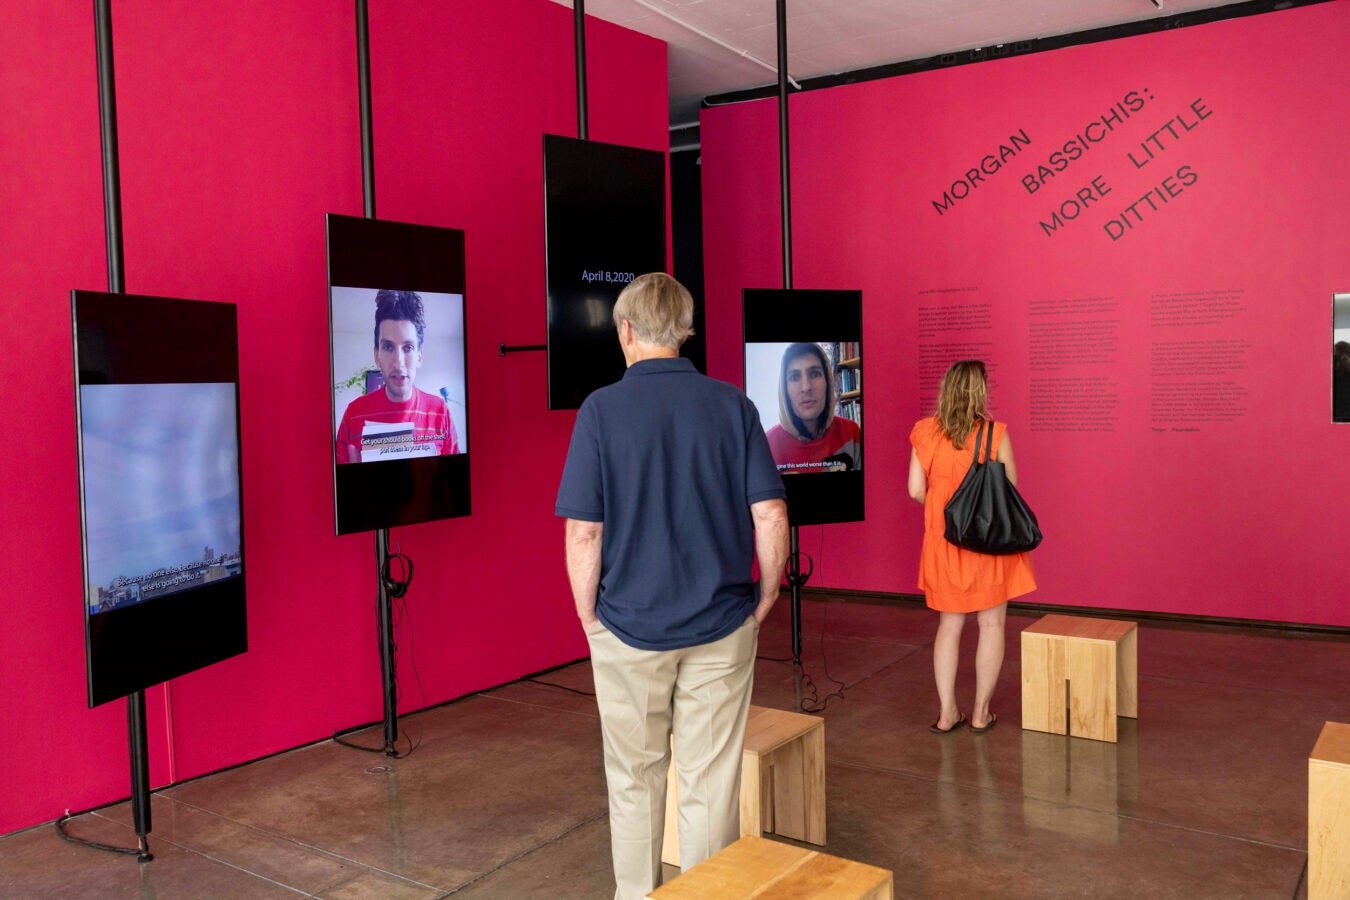 Video screens in the "More Little Ditties" exhibit.